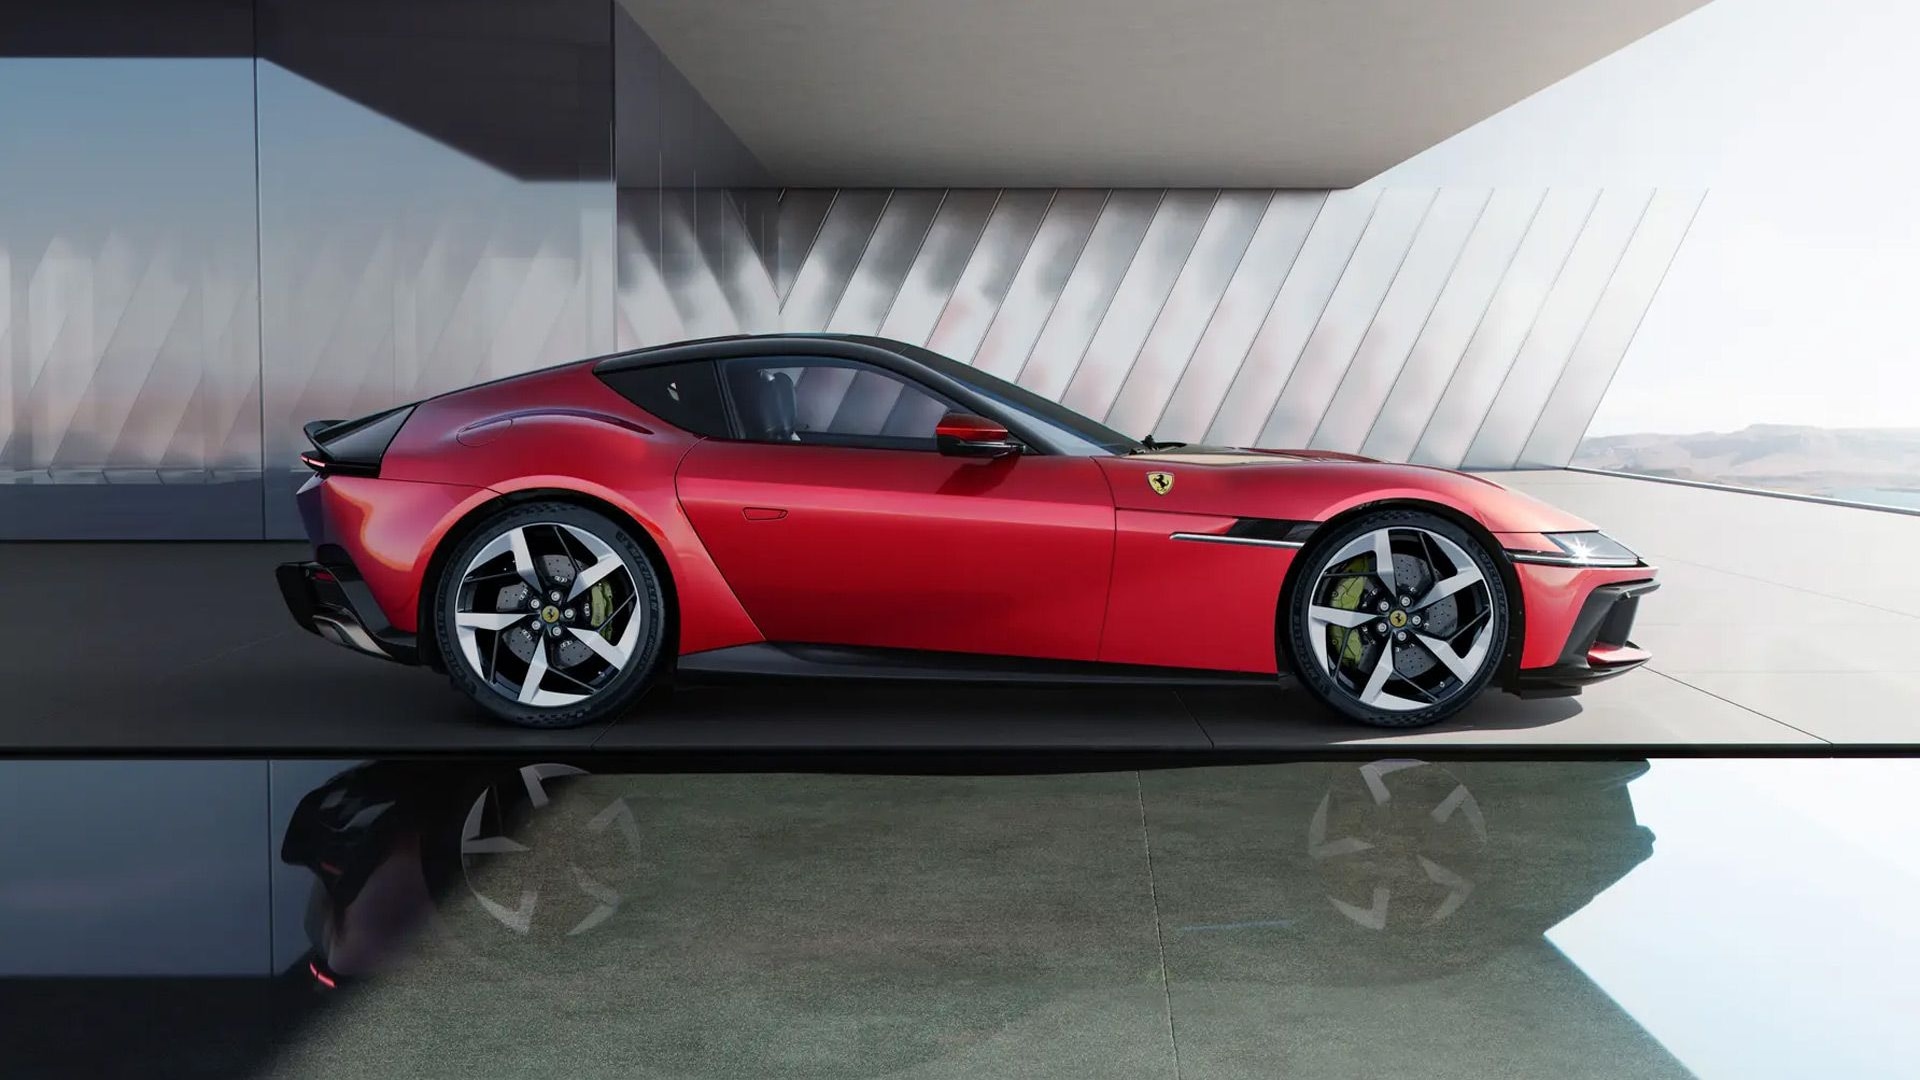 Meet Ferrari's Newest Beast: The 12Cilindri Supercar Blends Classic Thrills with Cutting-Edge Tech